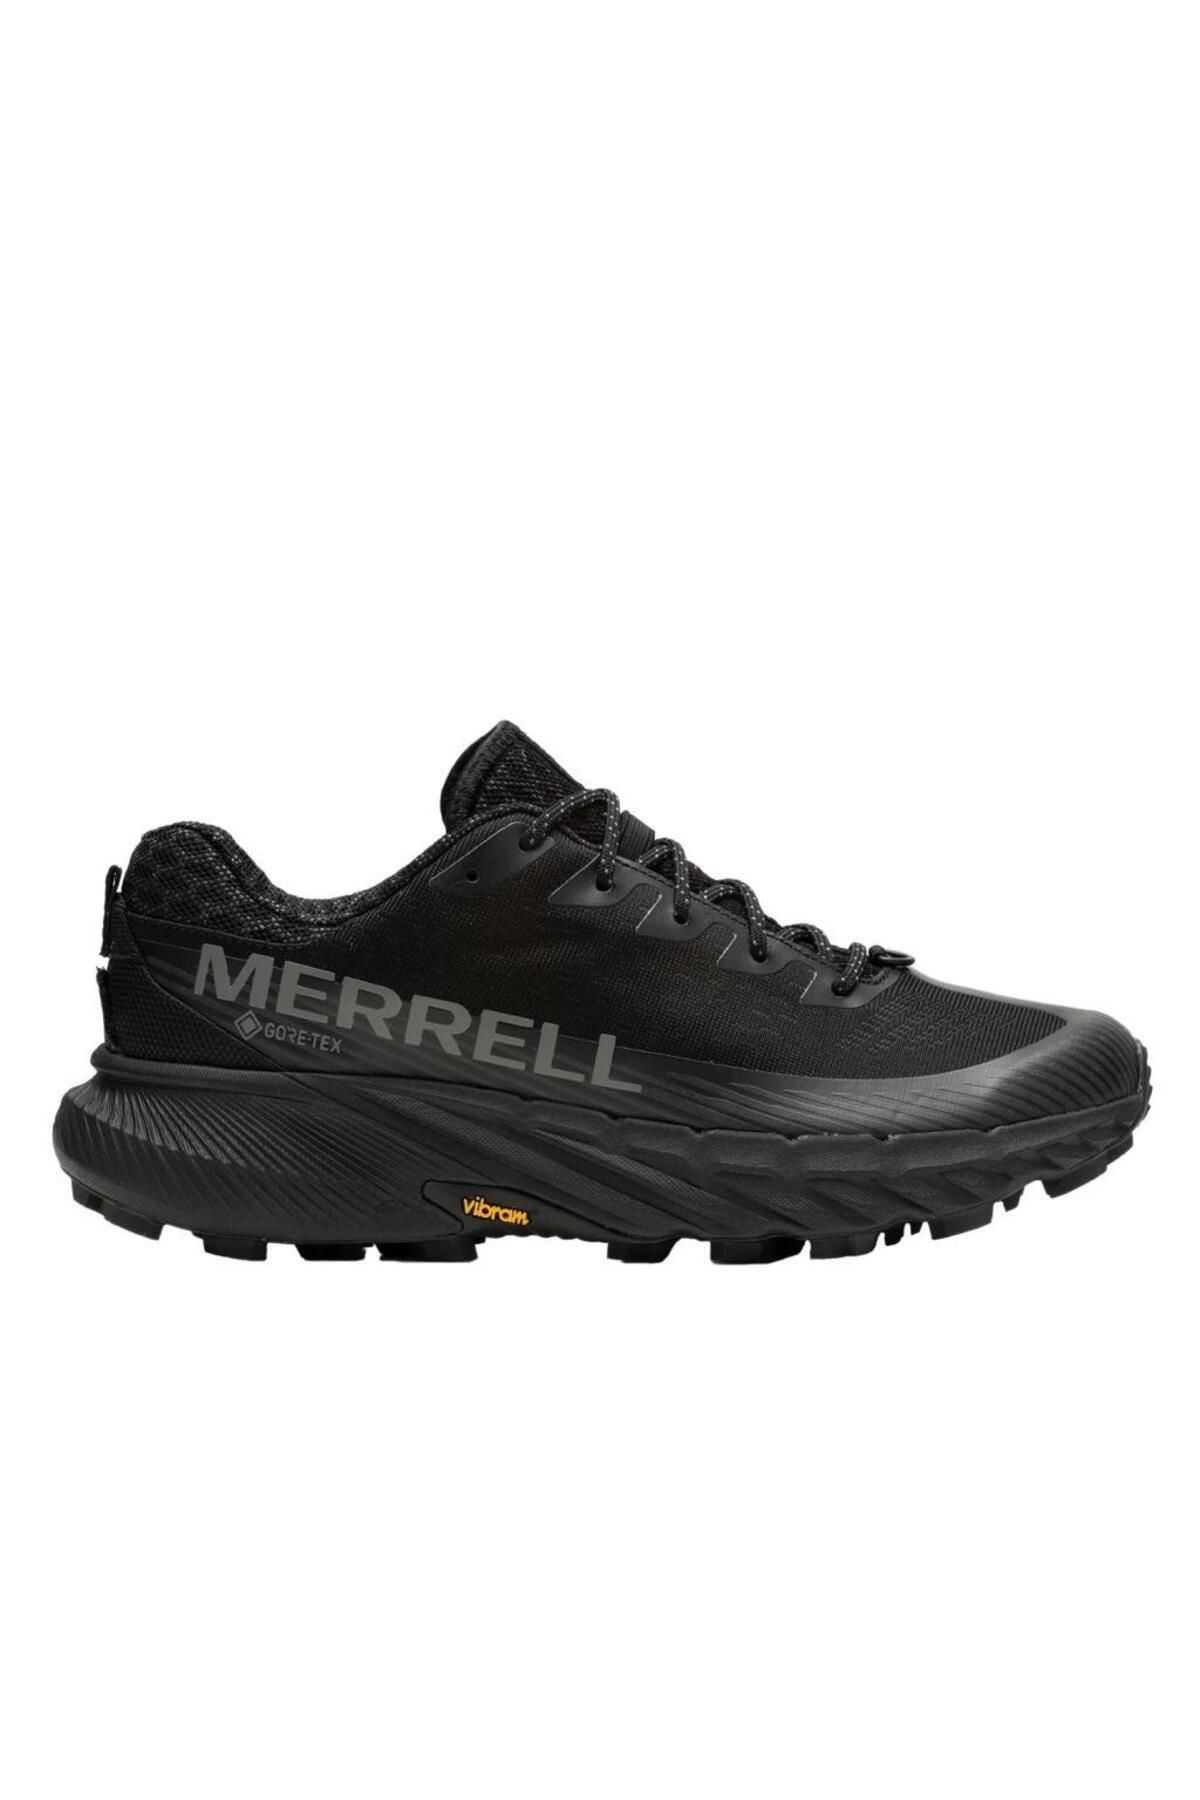 Merrell J067745 Agility Peak 5 GTX Black/Black Erkek Outdoor